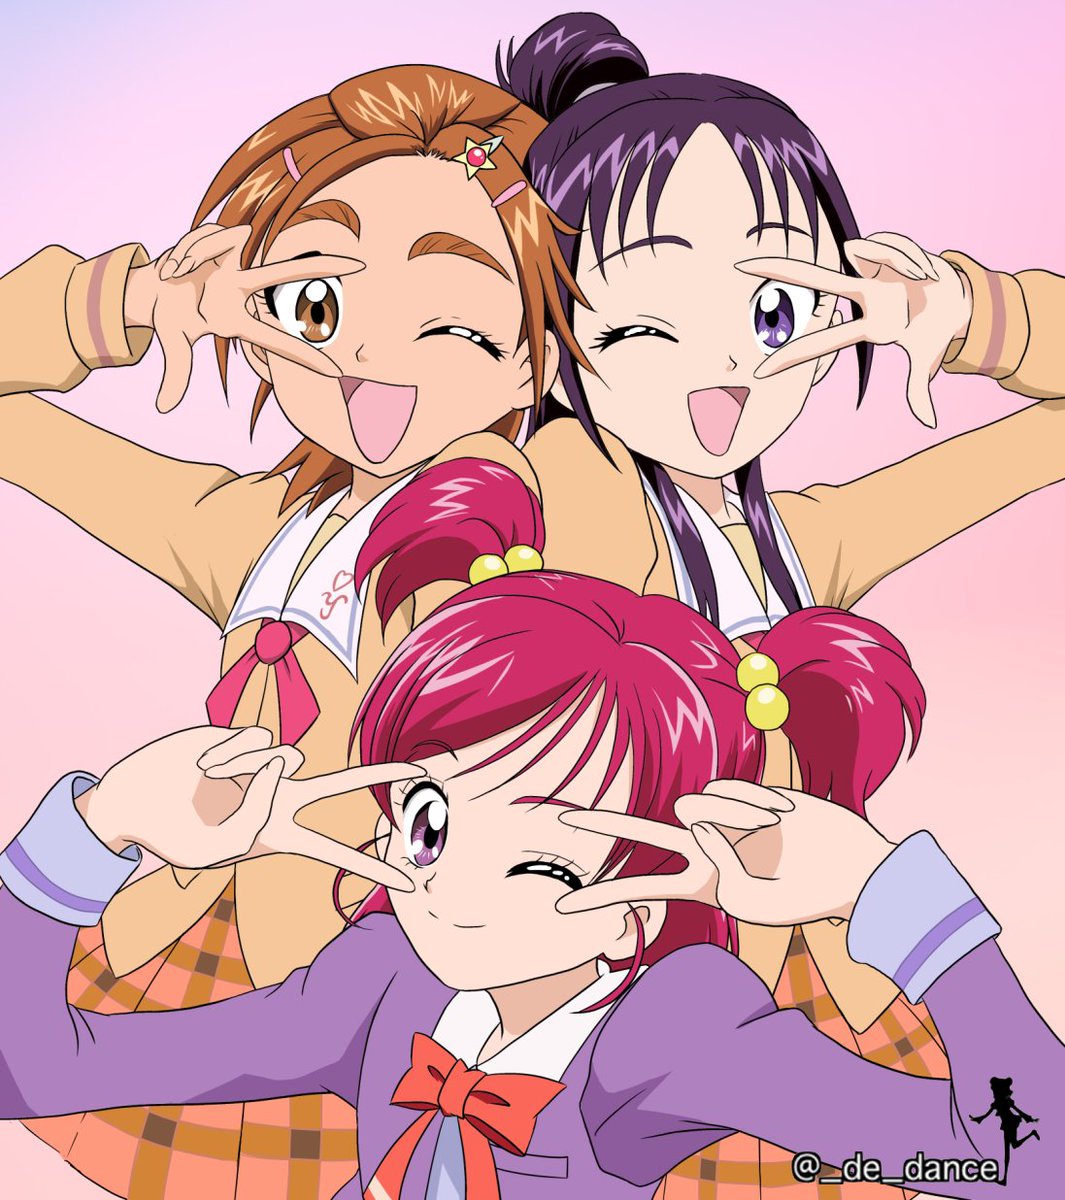 yumehara nozomi multiple girls school uniform one eye closed 3girls purple eyes very short hair purple hair  illustration images